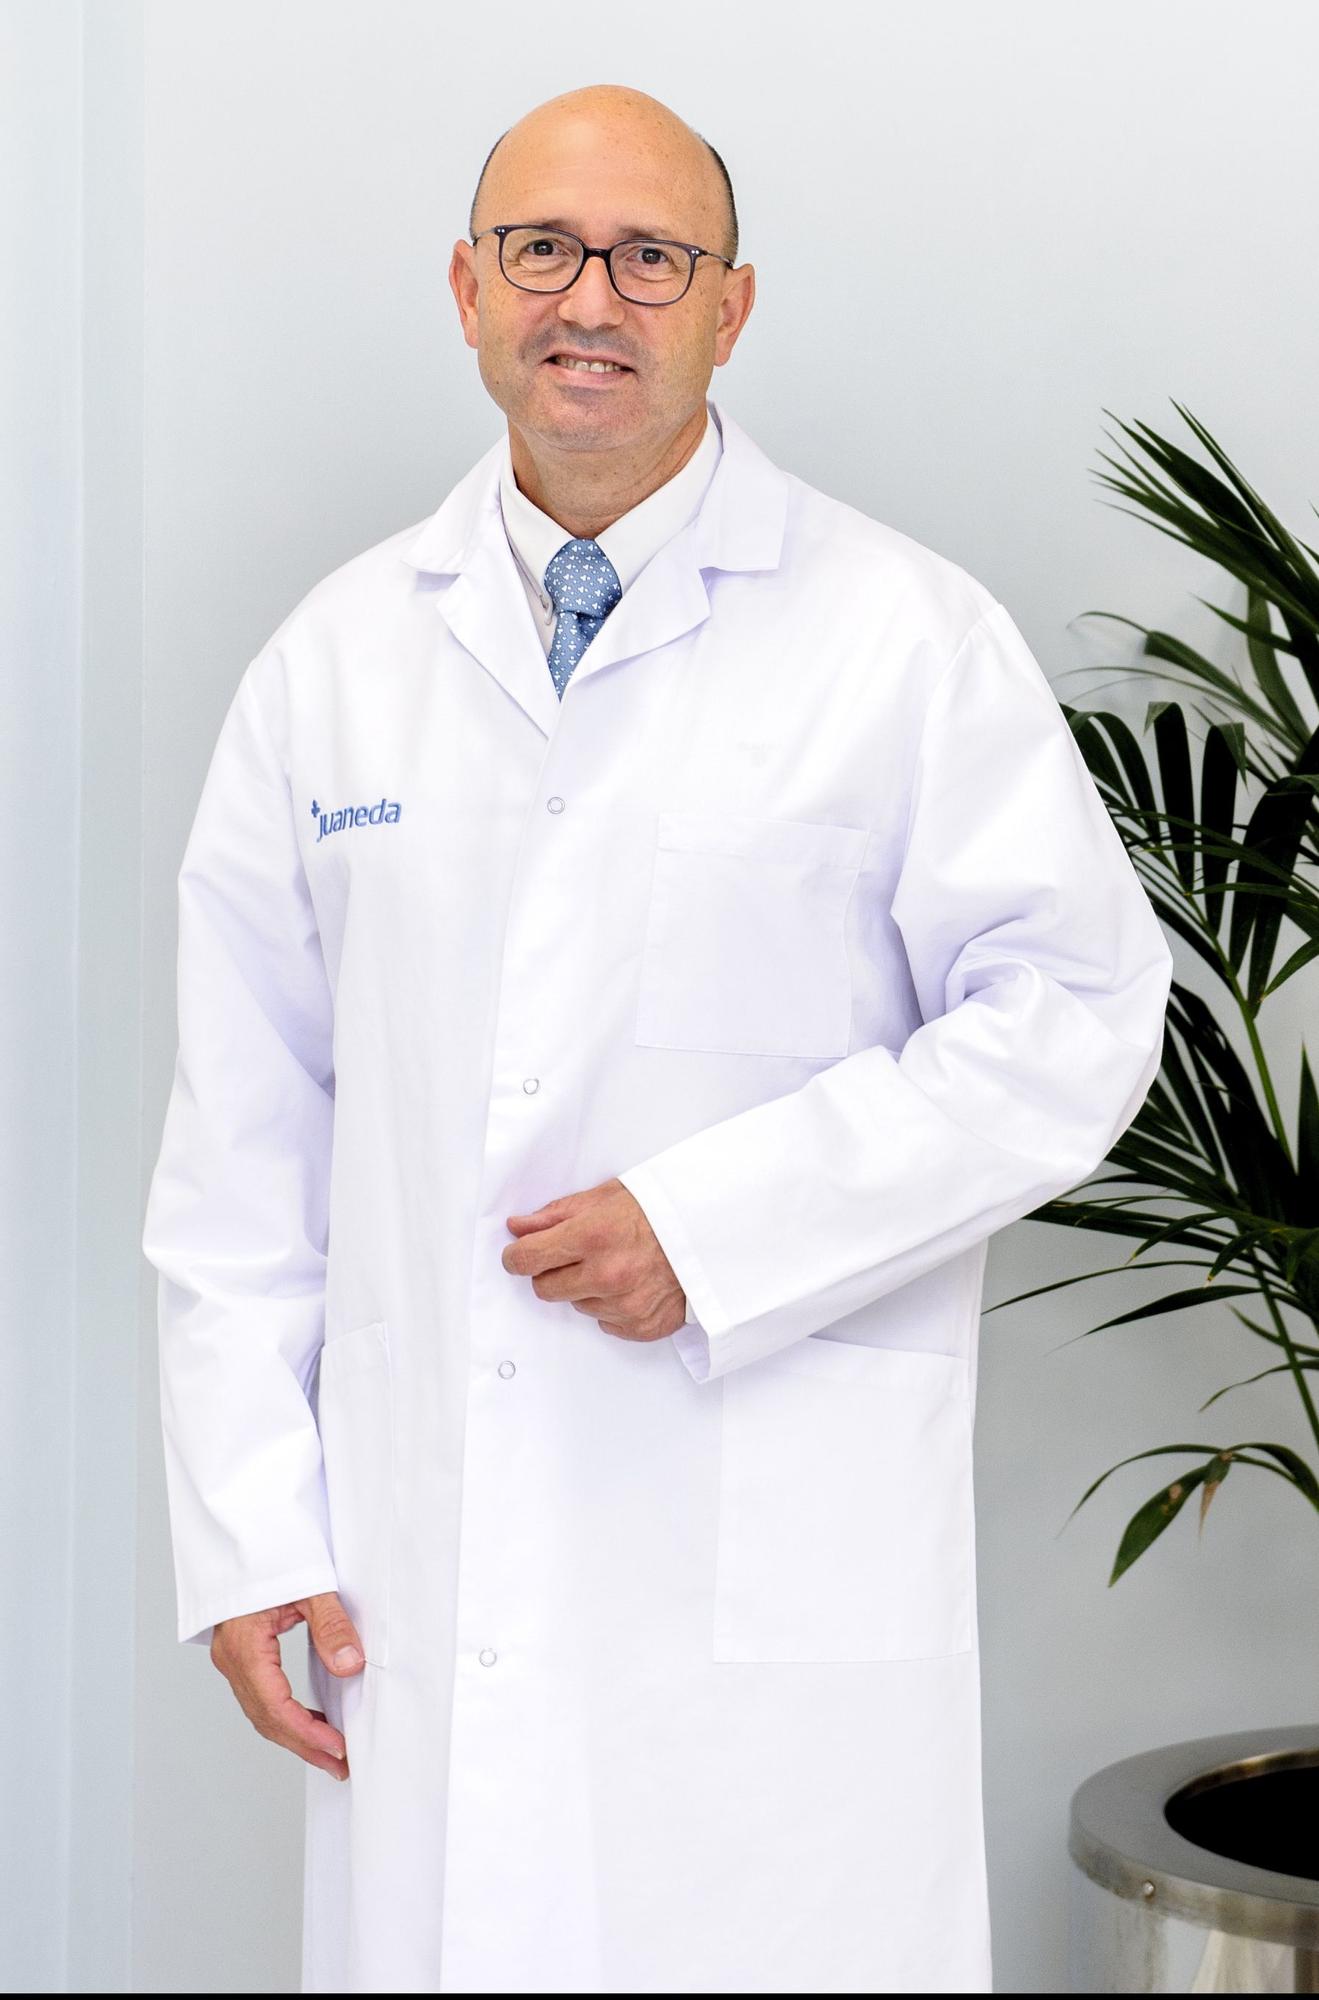 Dr. Andrés Cifuentes von der Klinik Juaneda.